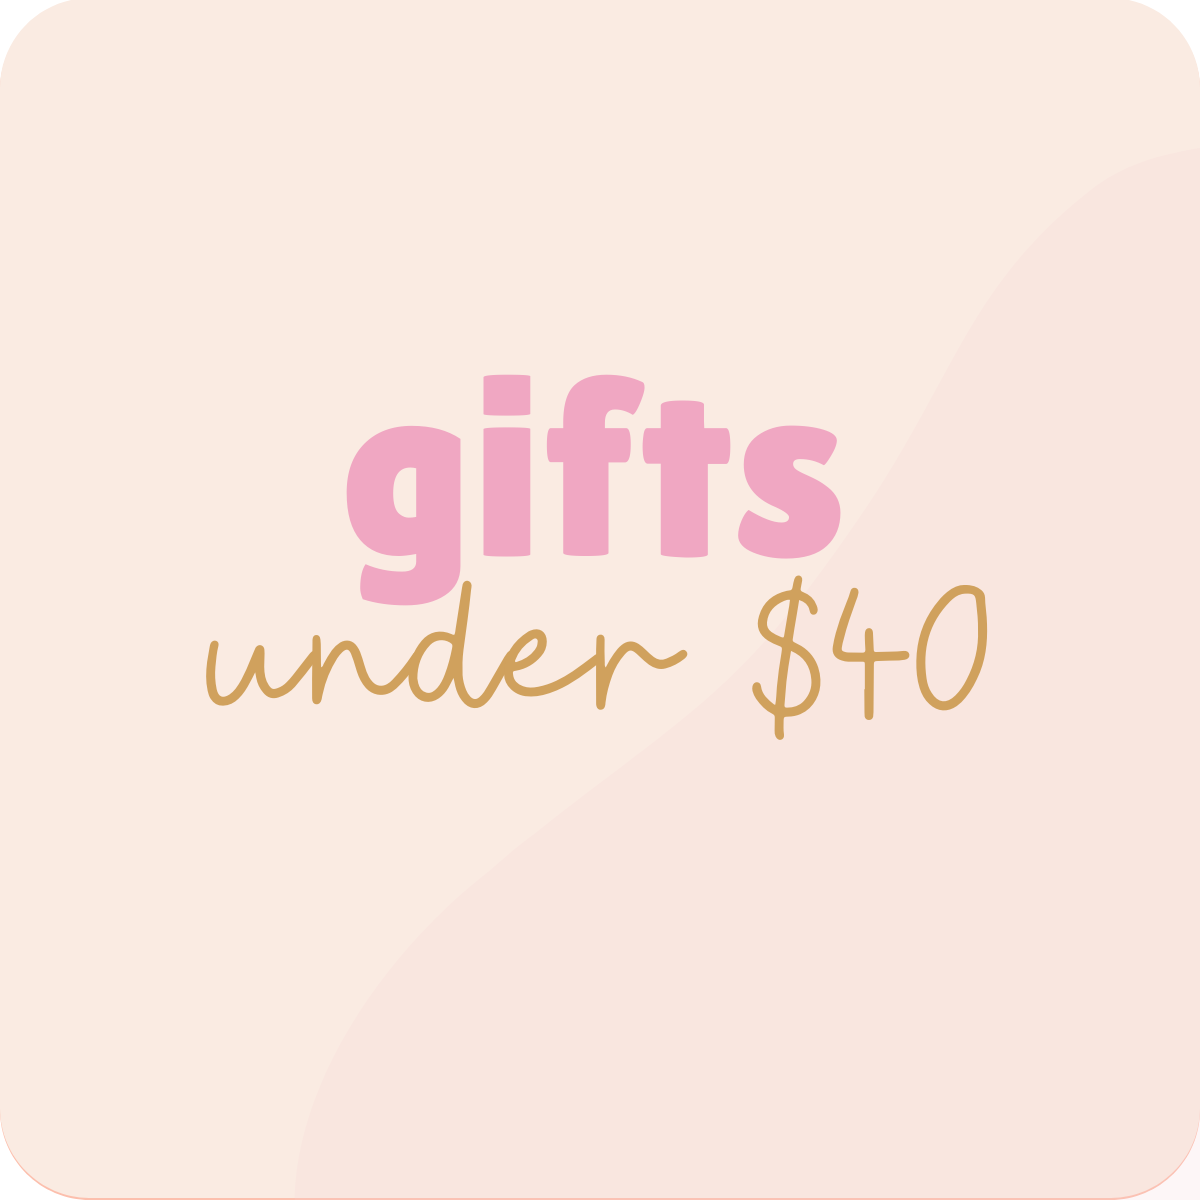 Gifts under $40